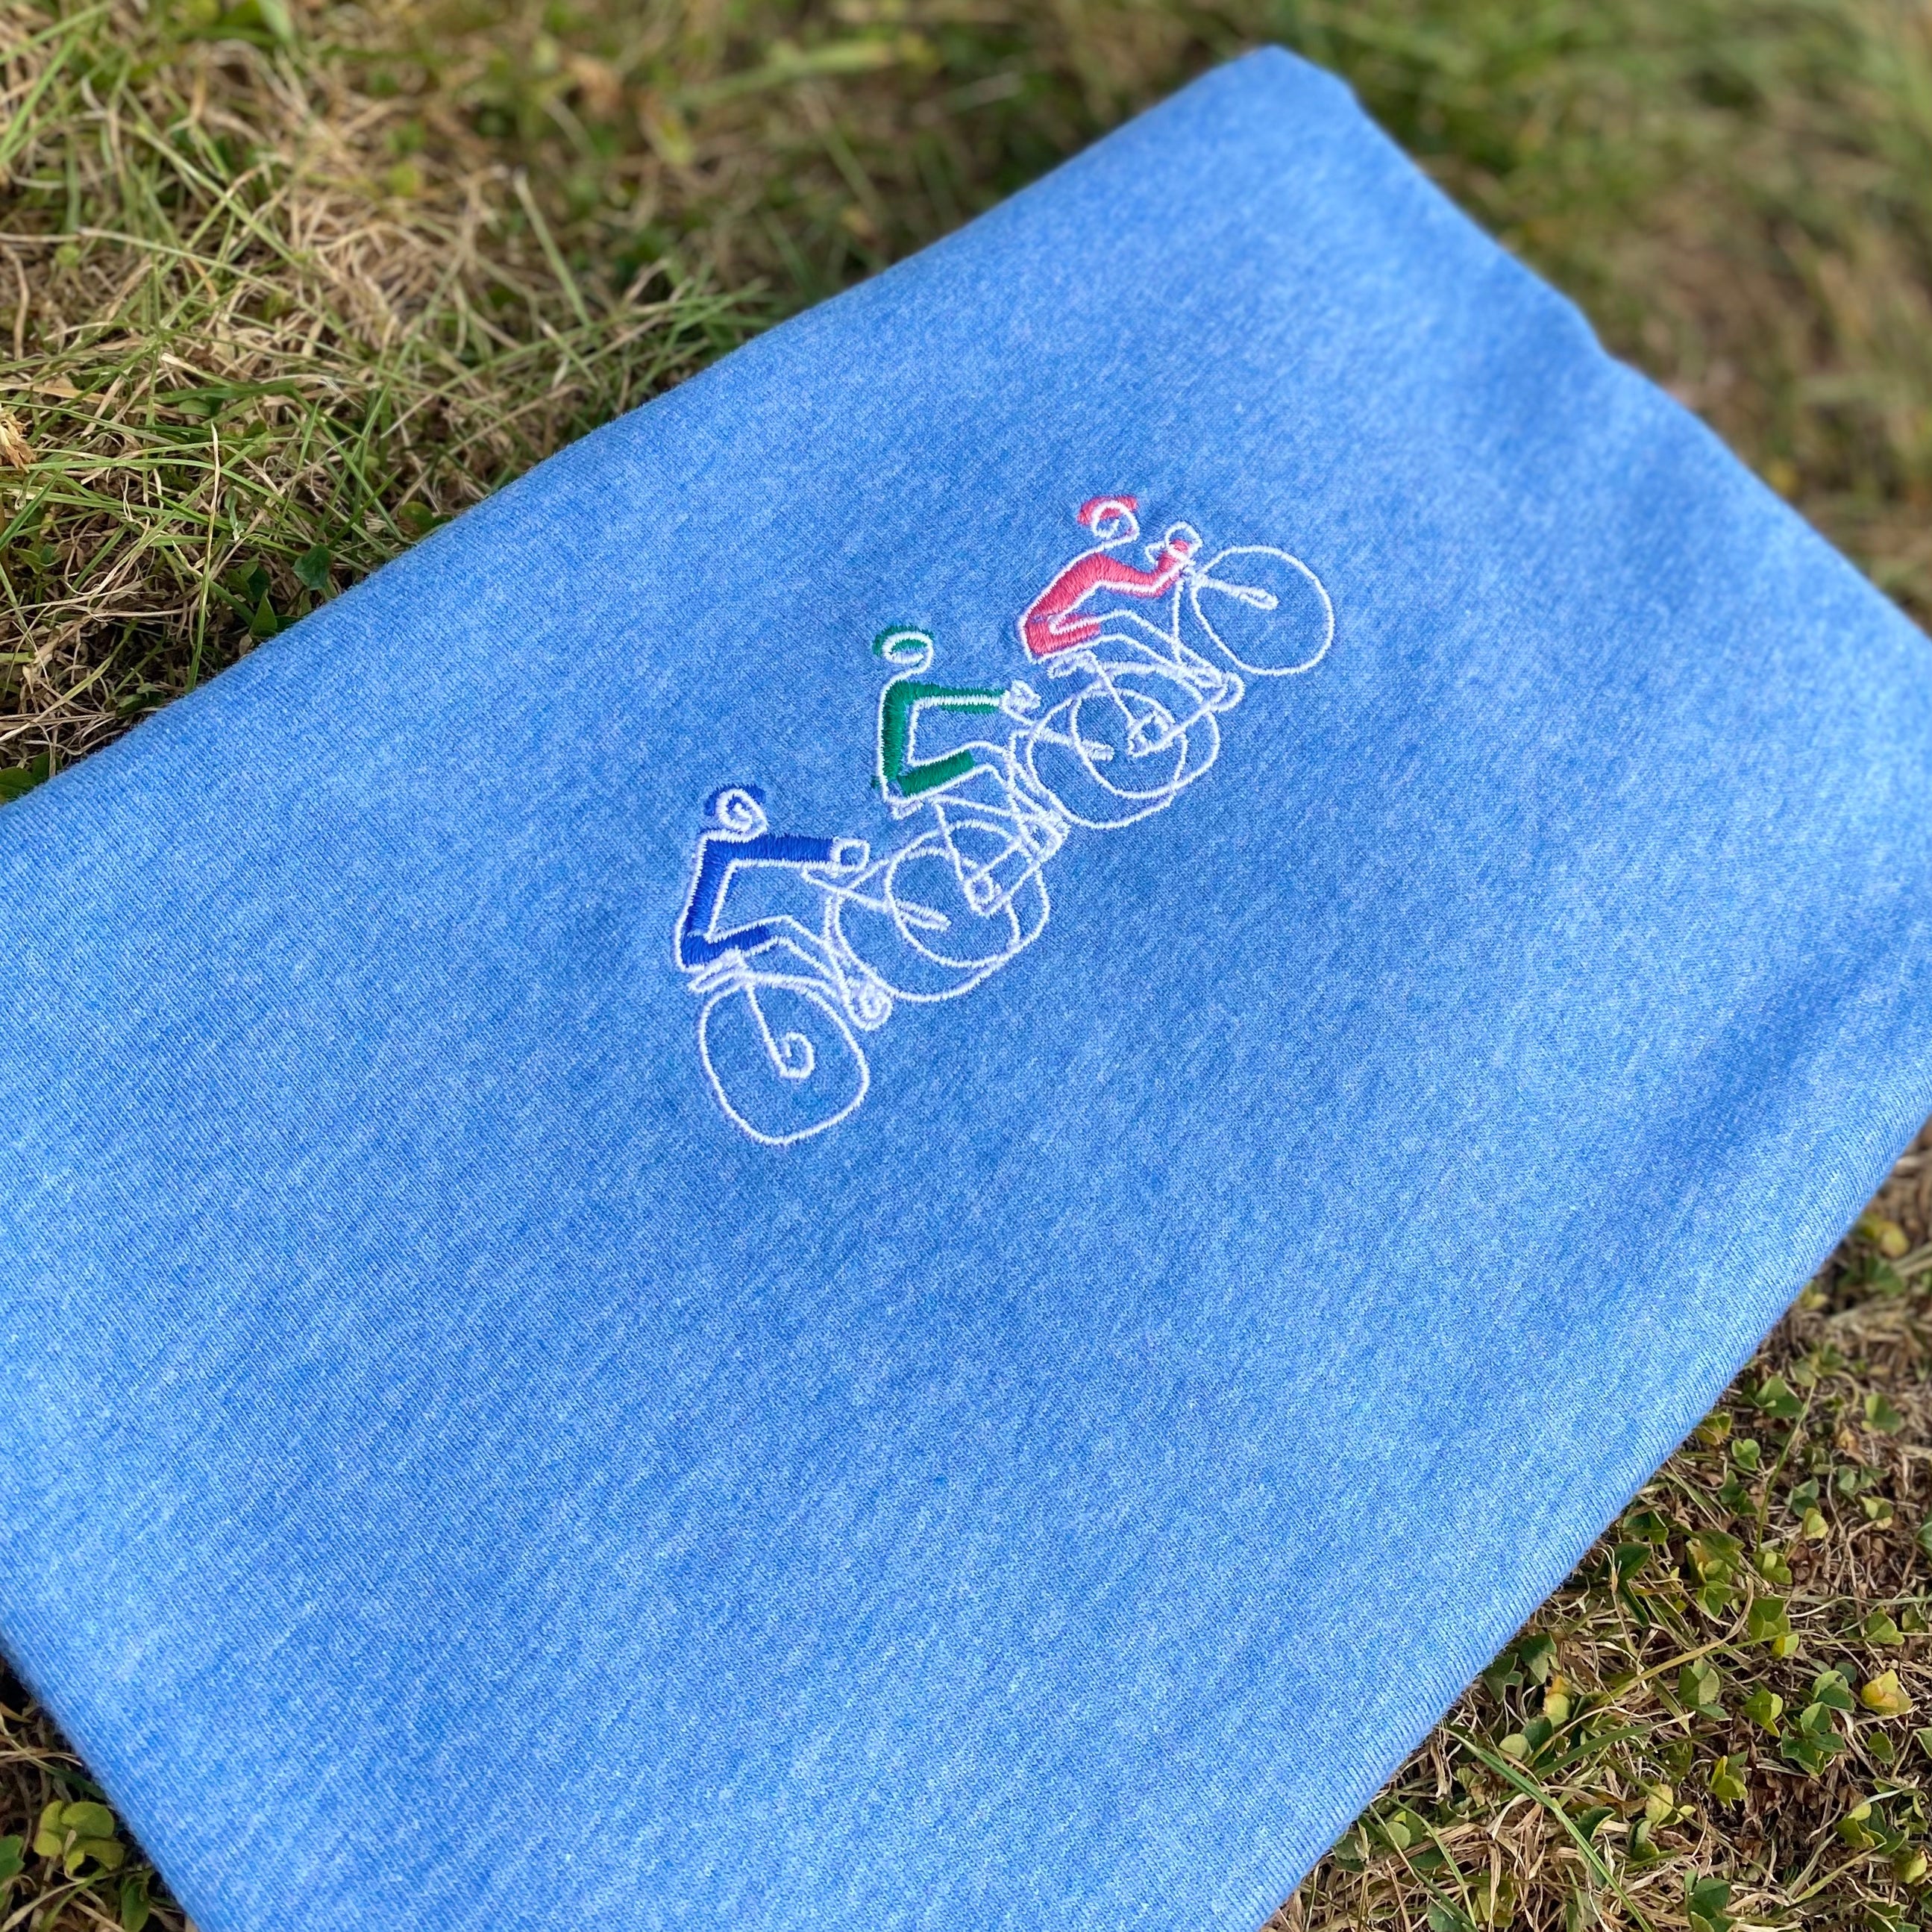 Bike Tour Embroidered Sweatshirt - Spoke & Solace